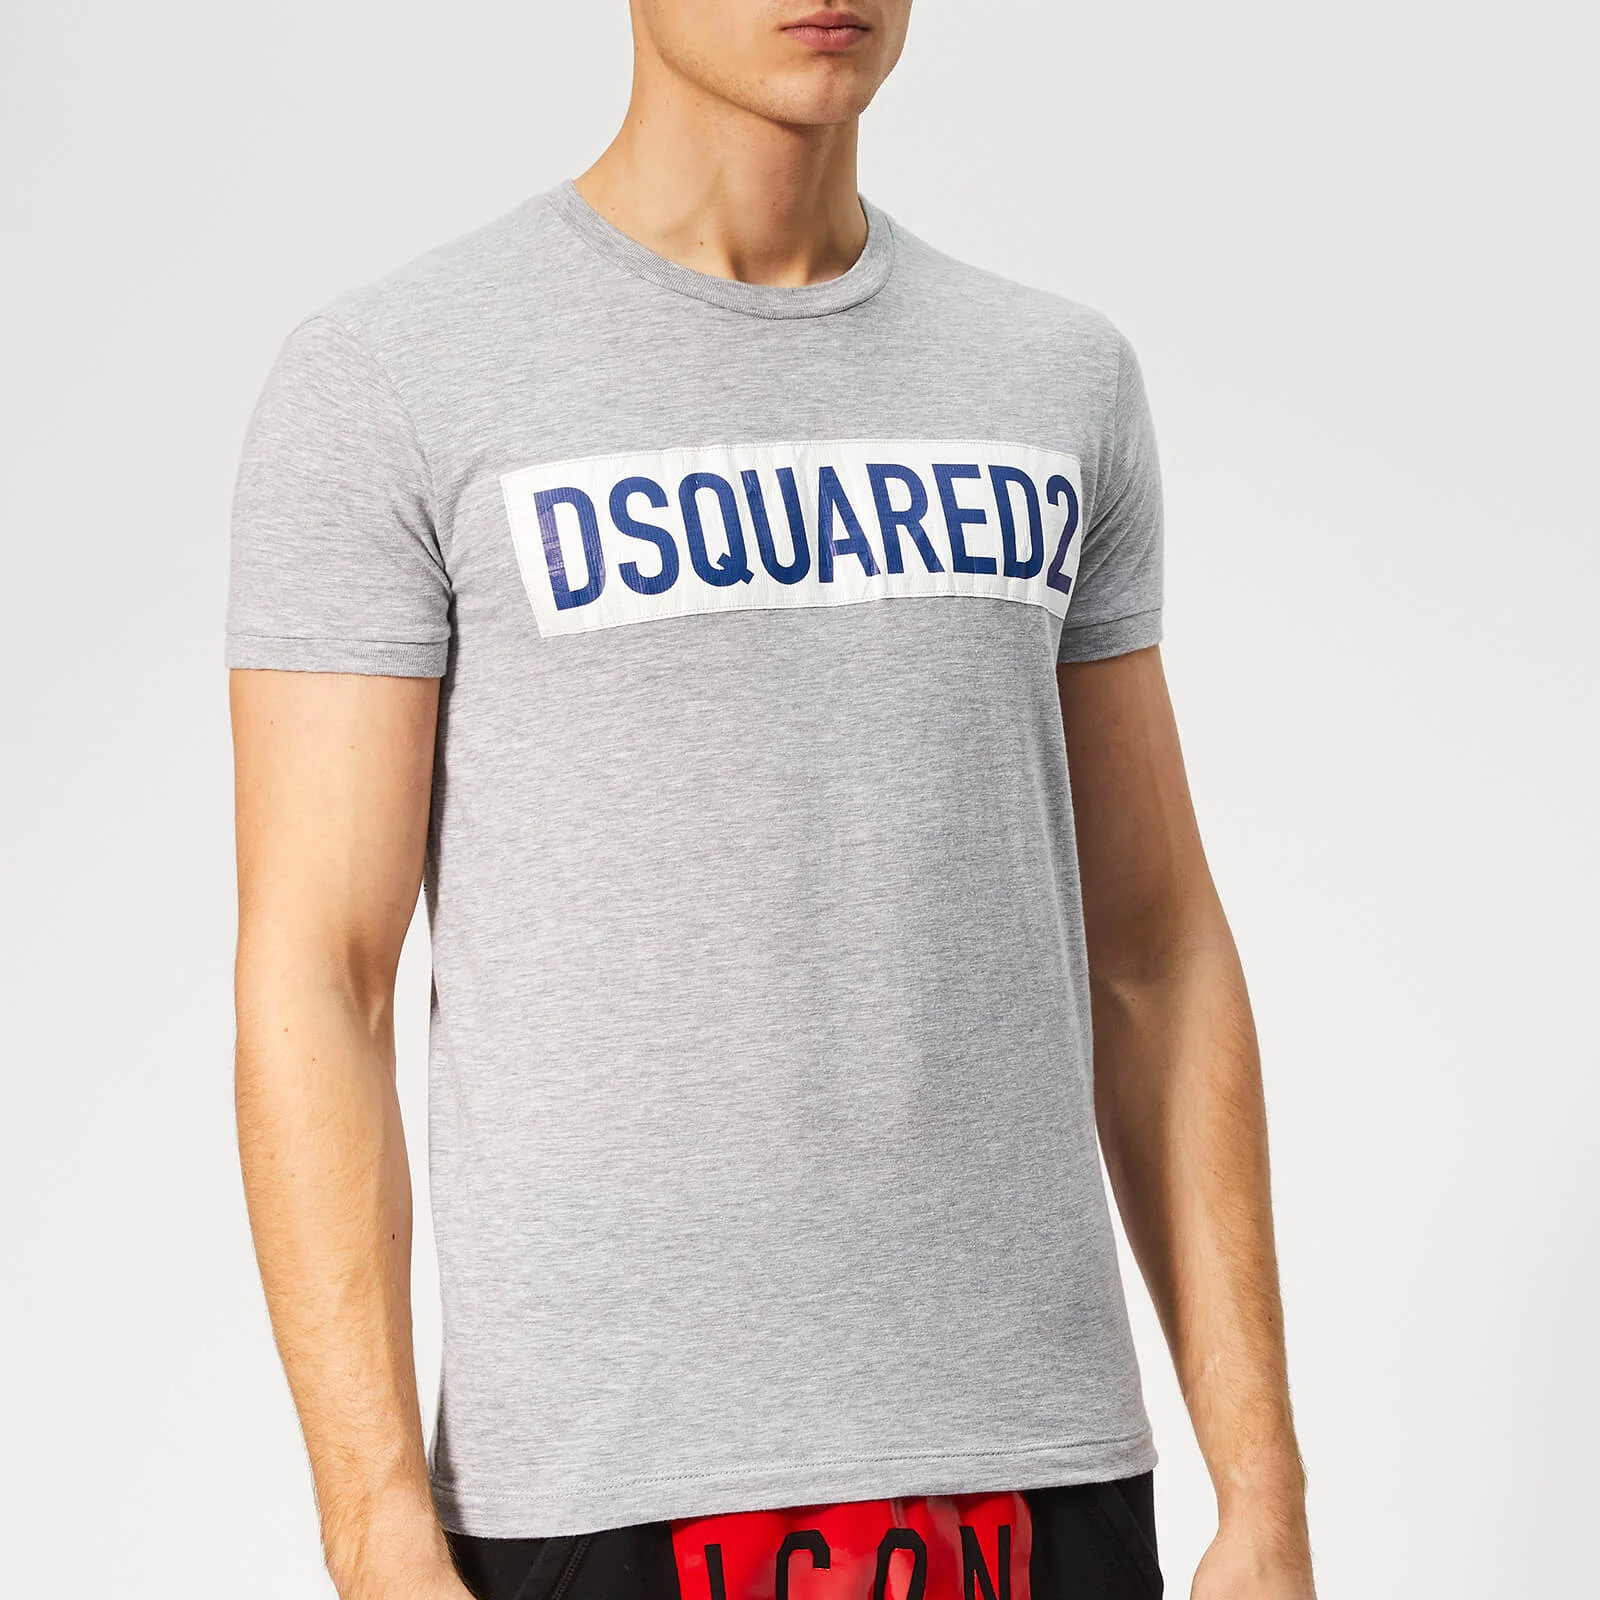 Dsquared2 Men's Box Print T-Shirt - Grey Melange Image 1